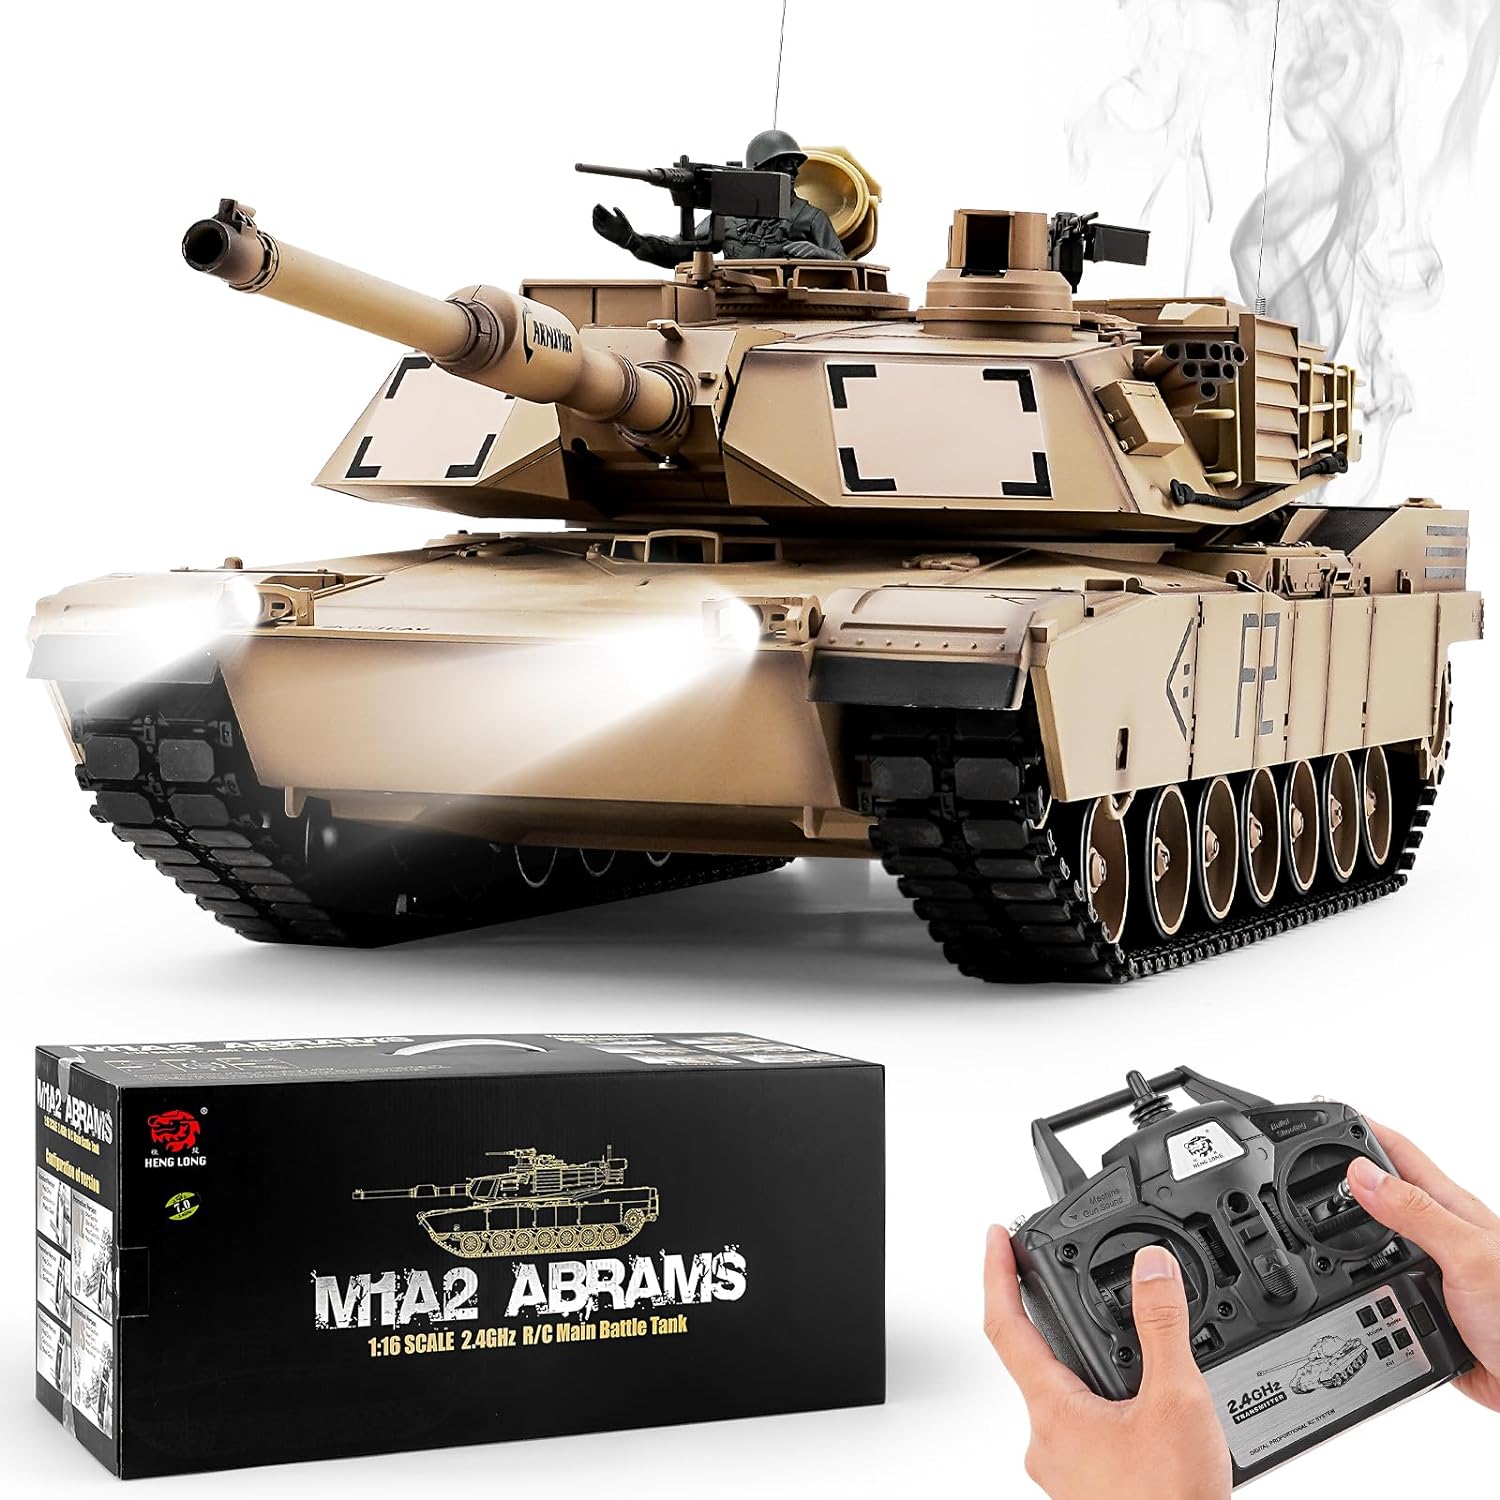 Радиоуправляемый танк Heng Long US M1A2 Abrams Pro V7.0 масштаб 1:16 RTR 2.4G - 3918-1Pro V7.0